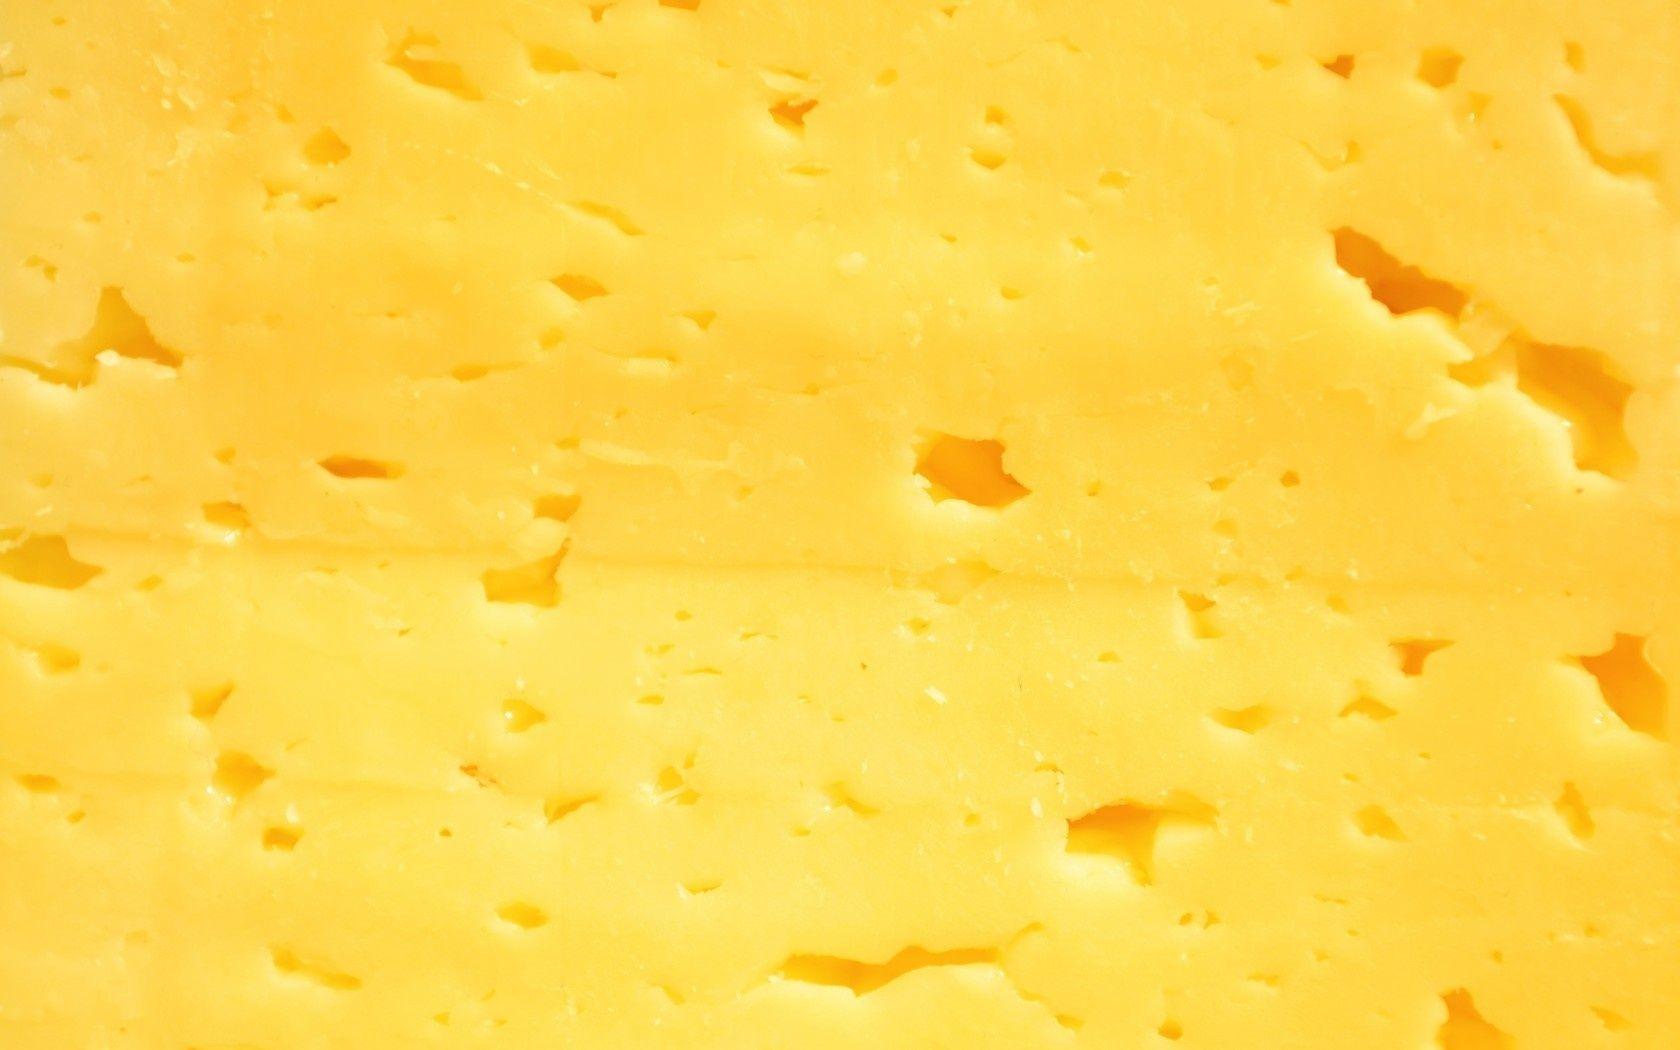 Cheese Texture Computer Wallpaper 51356 1680x1050 px